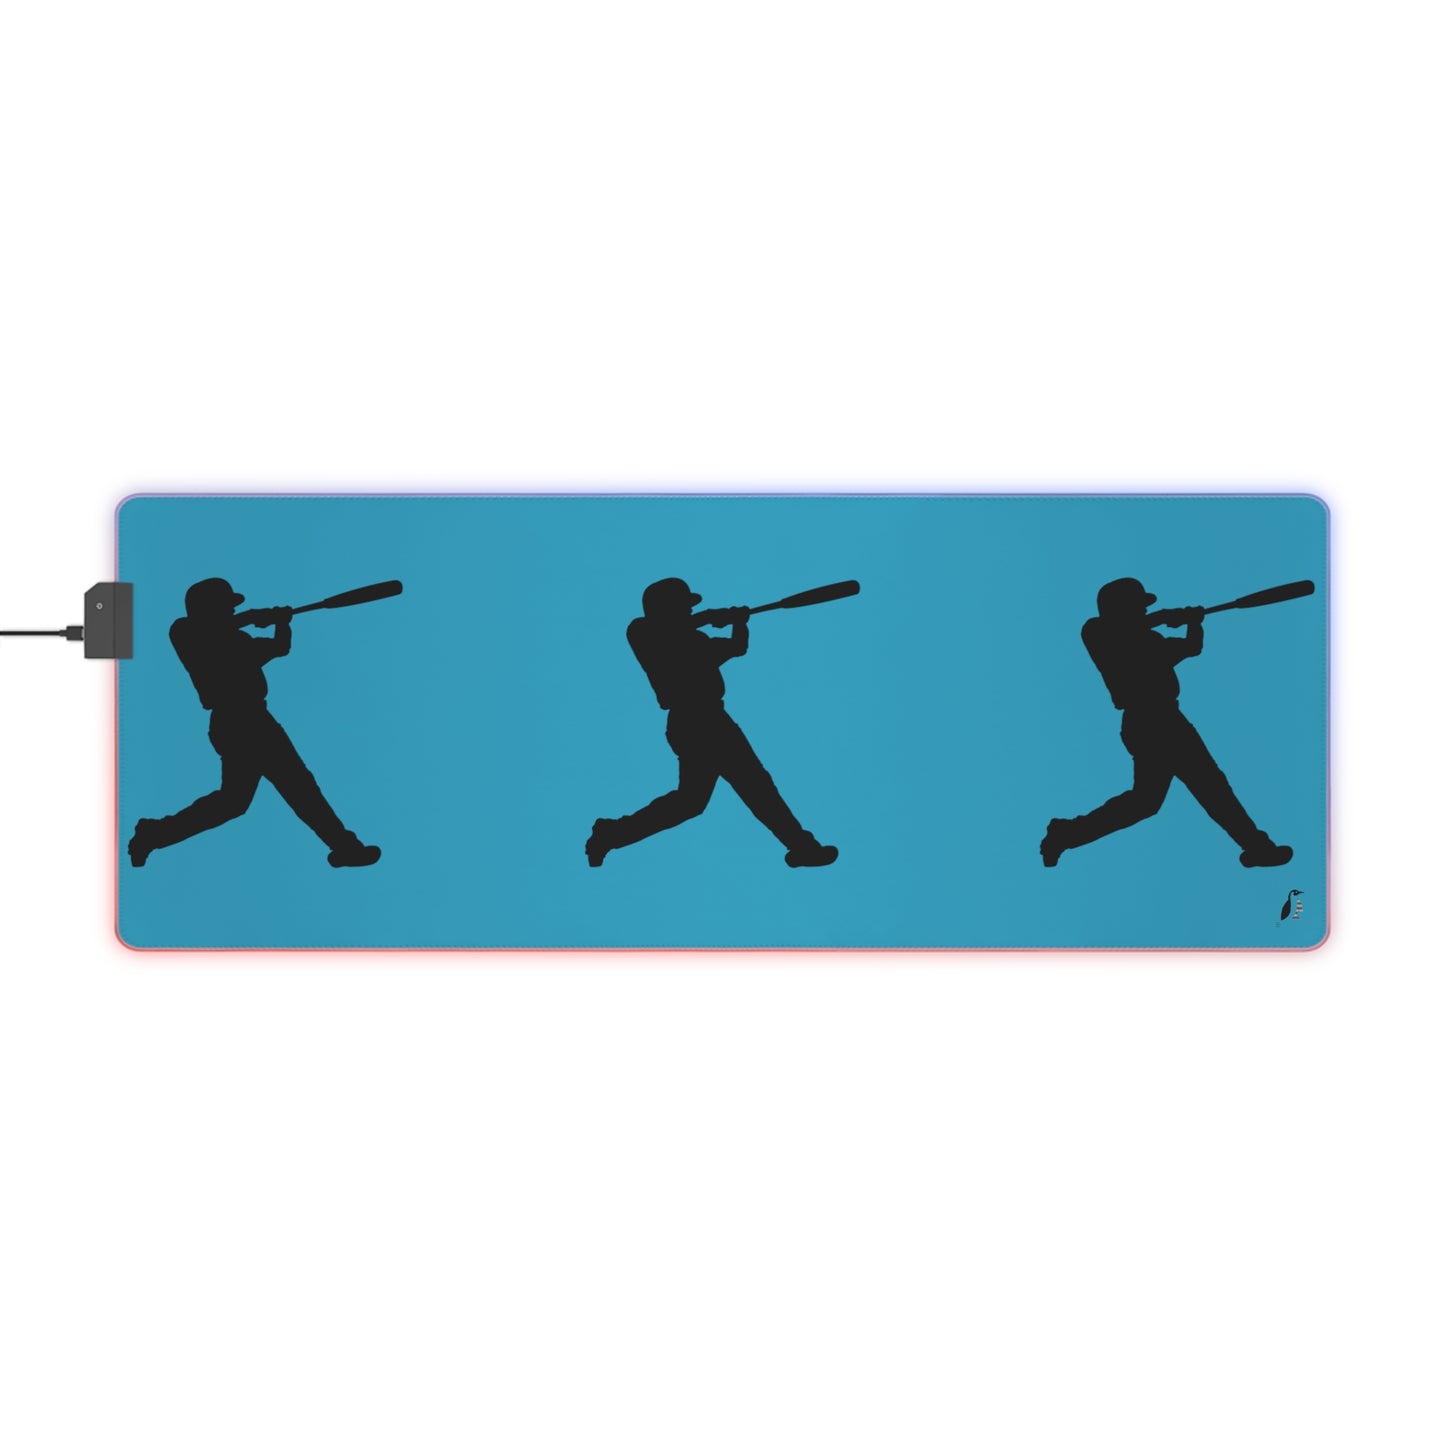 LED Gaming Mouse Pad: Baseball Turquoise